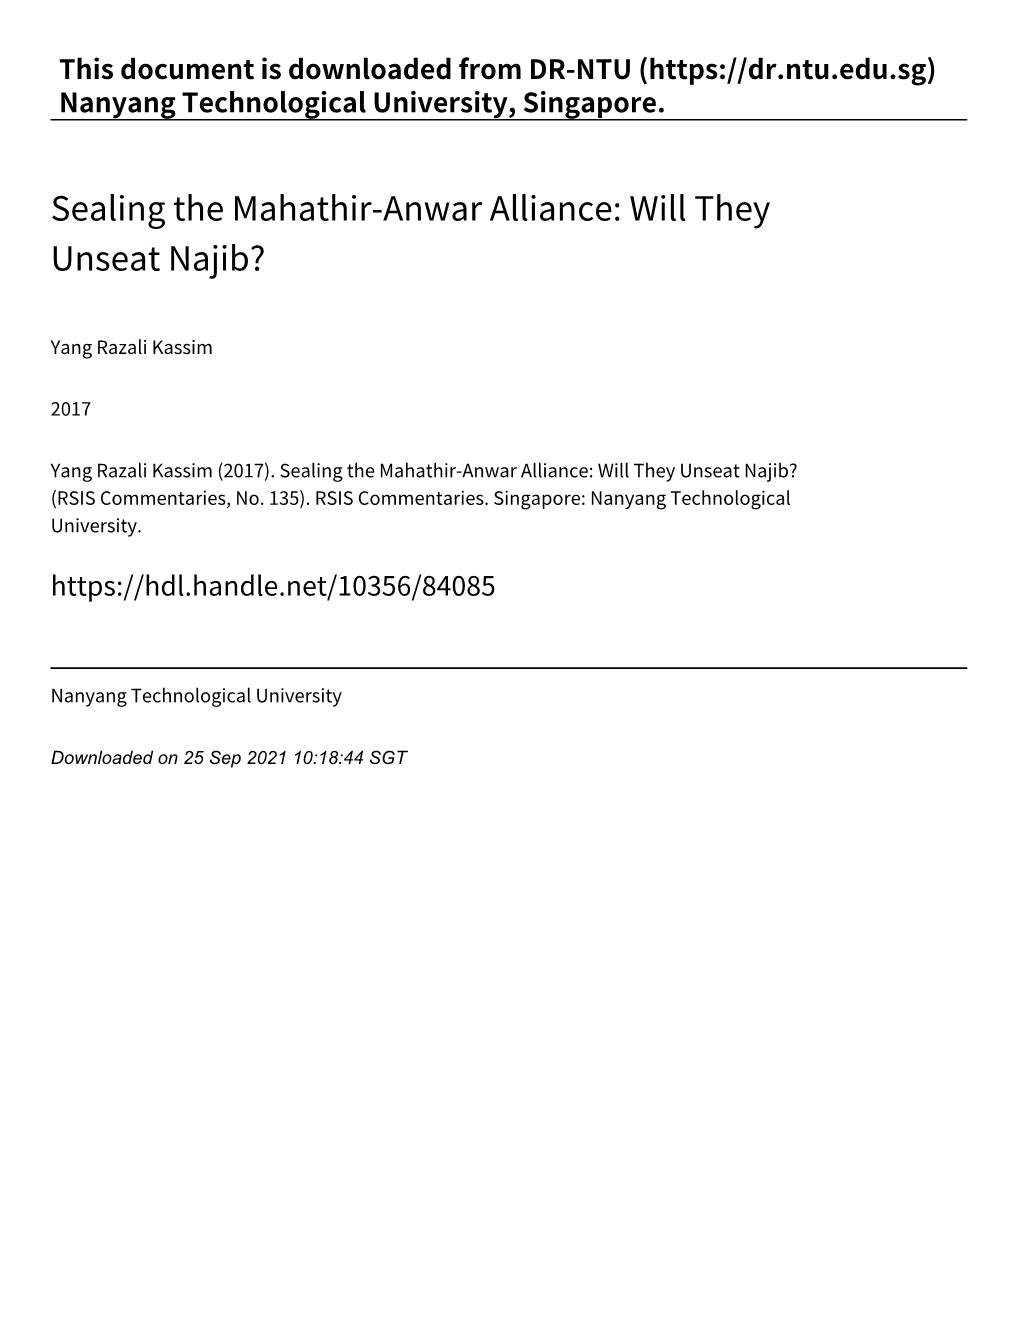 Sealing the Mahathir‑Anwar Alliance: Will They Unseat Najib?